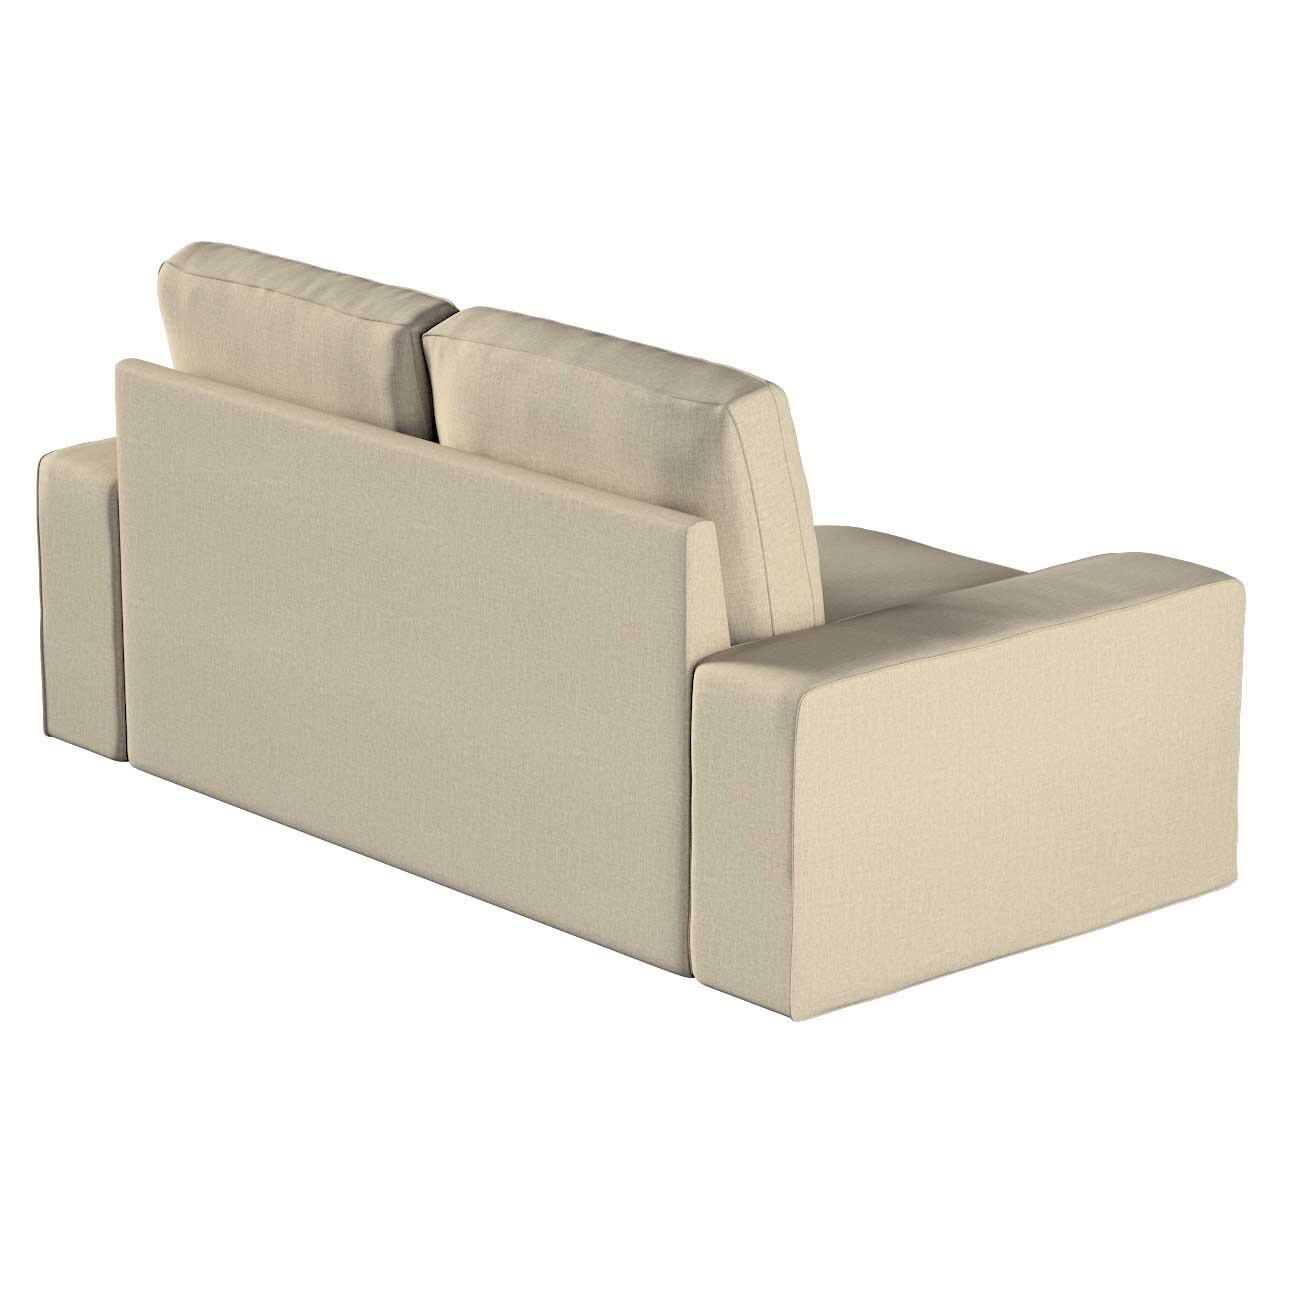 Bezug für Kivik 2-Sitzer Sofa, beige- grau, Bezug für Sofa Kivik 2-Sitzer, günstig online kaufen